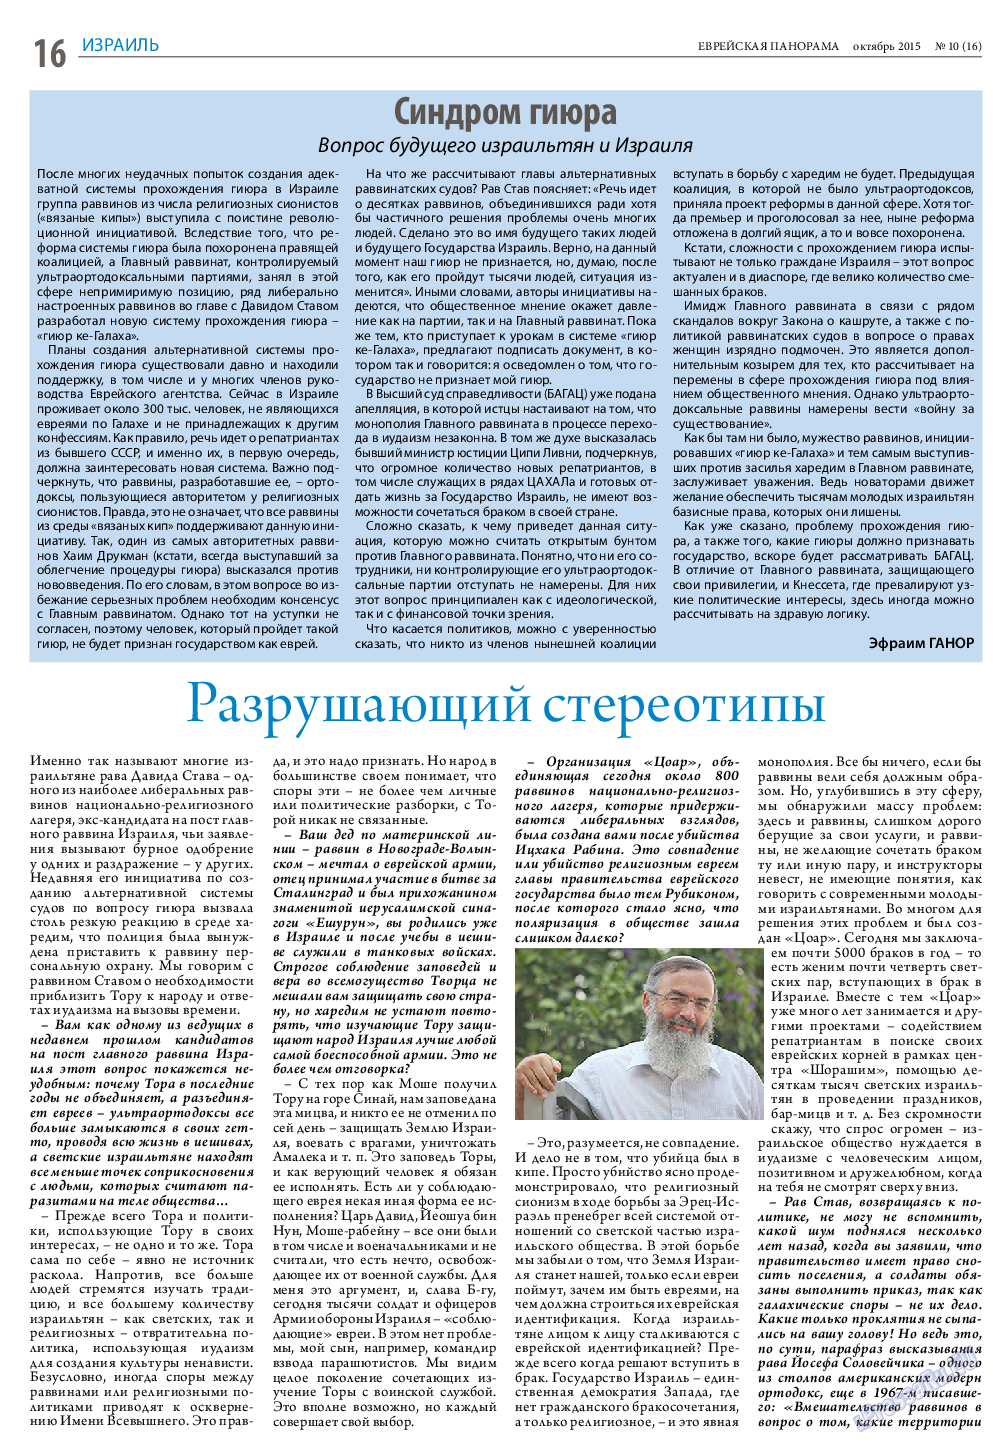 Еврейская панорама, газета. 2015 №10 стр.16